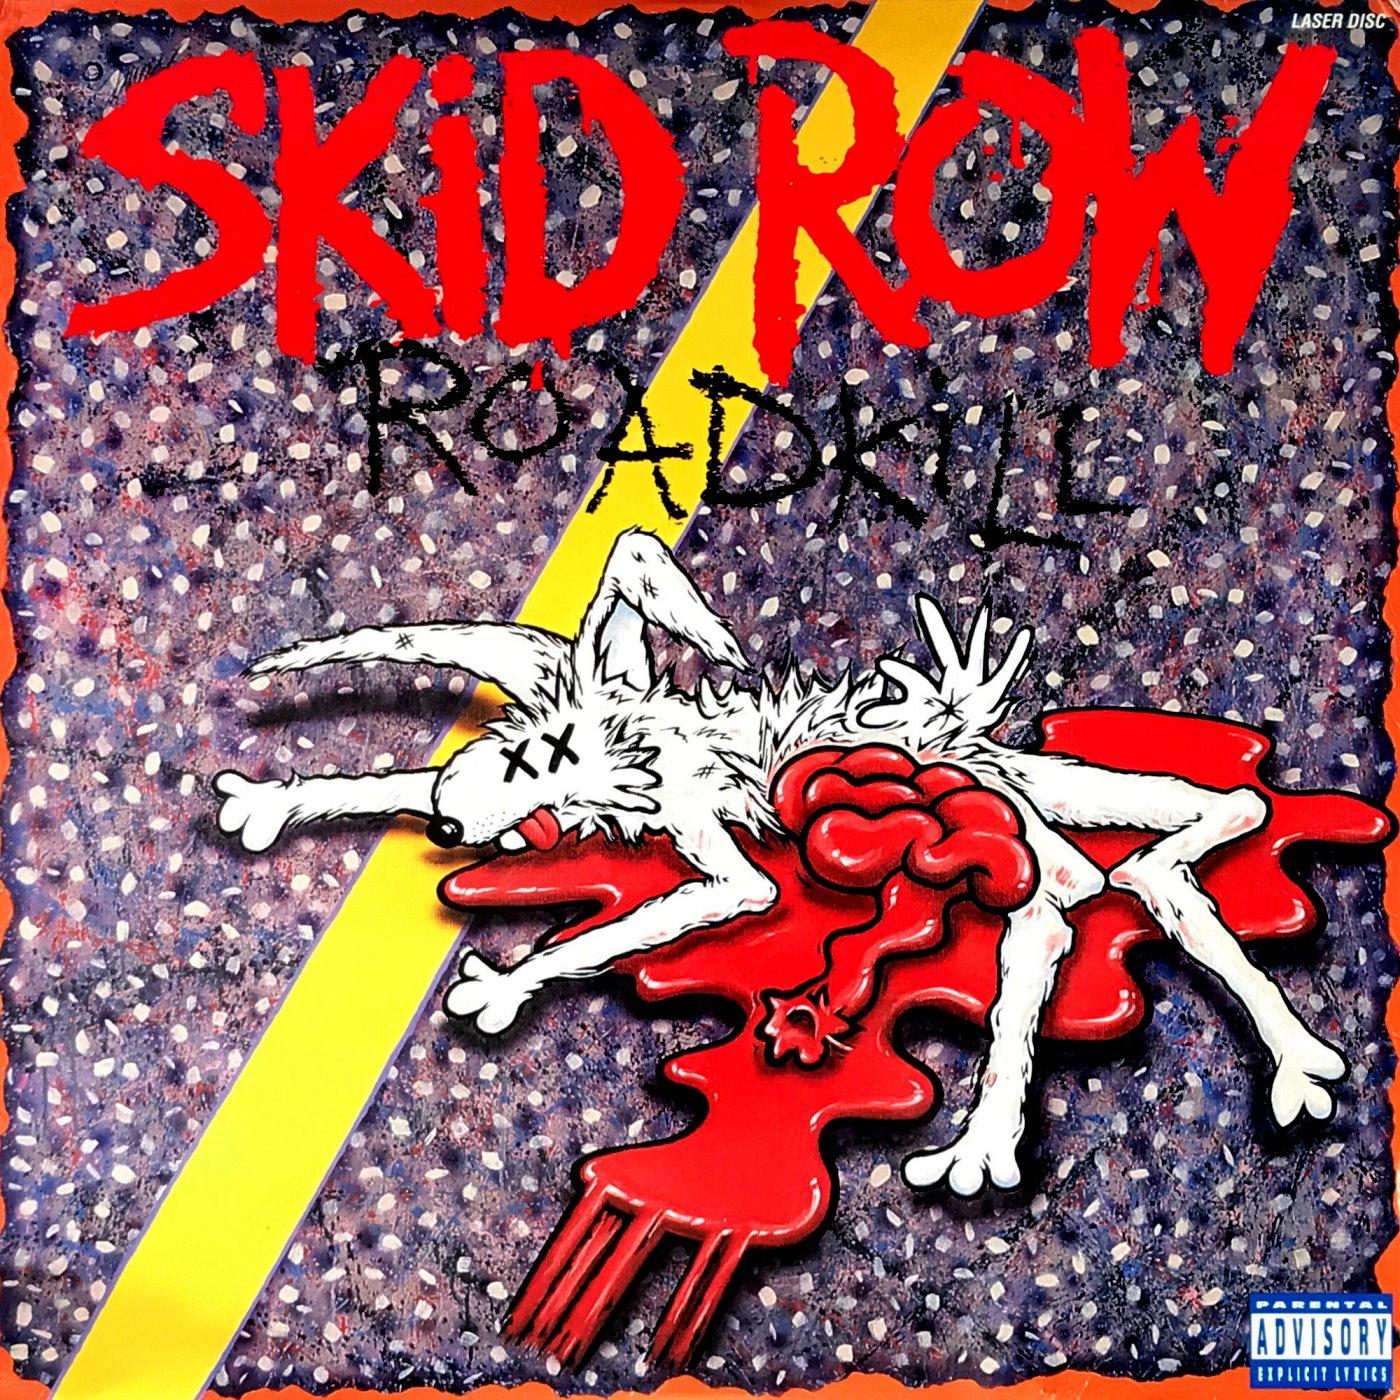 Cover - Skid Row - Roadkill.jpg